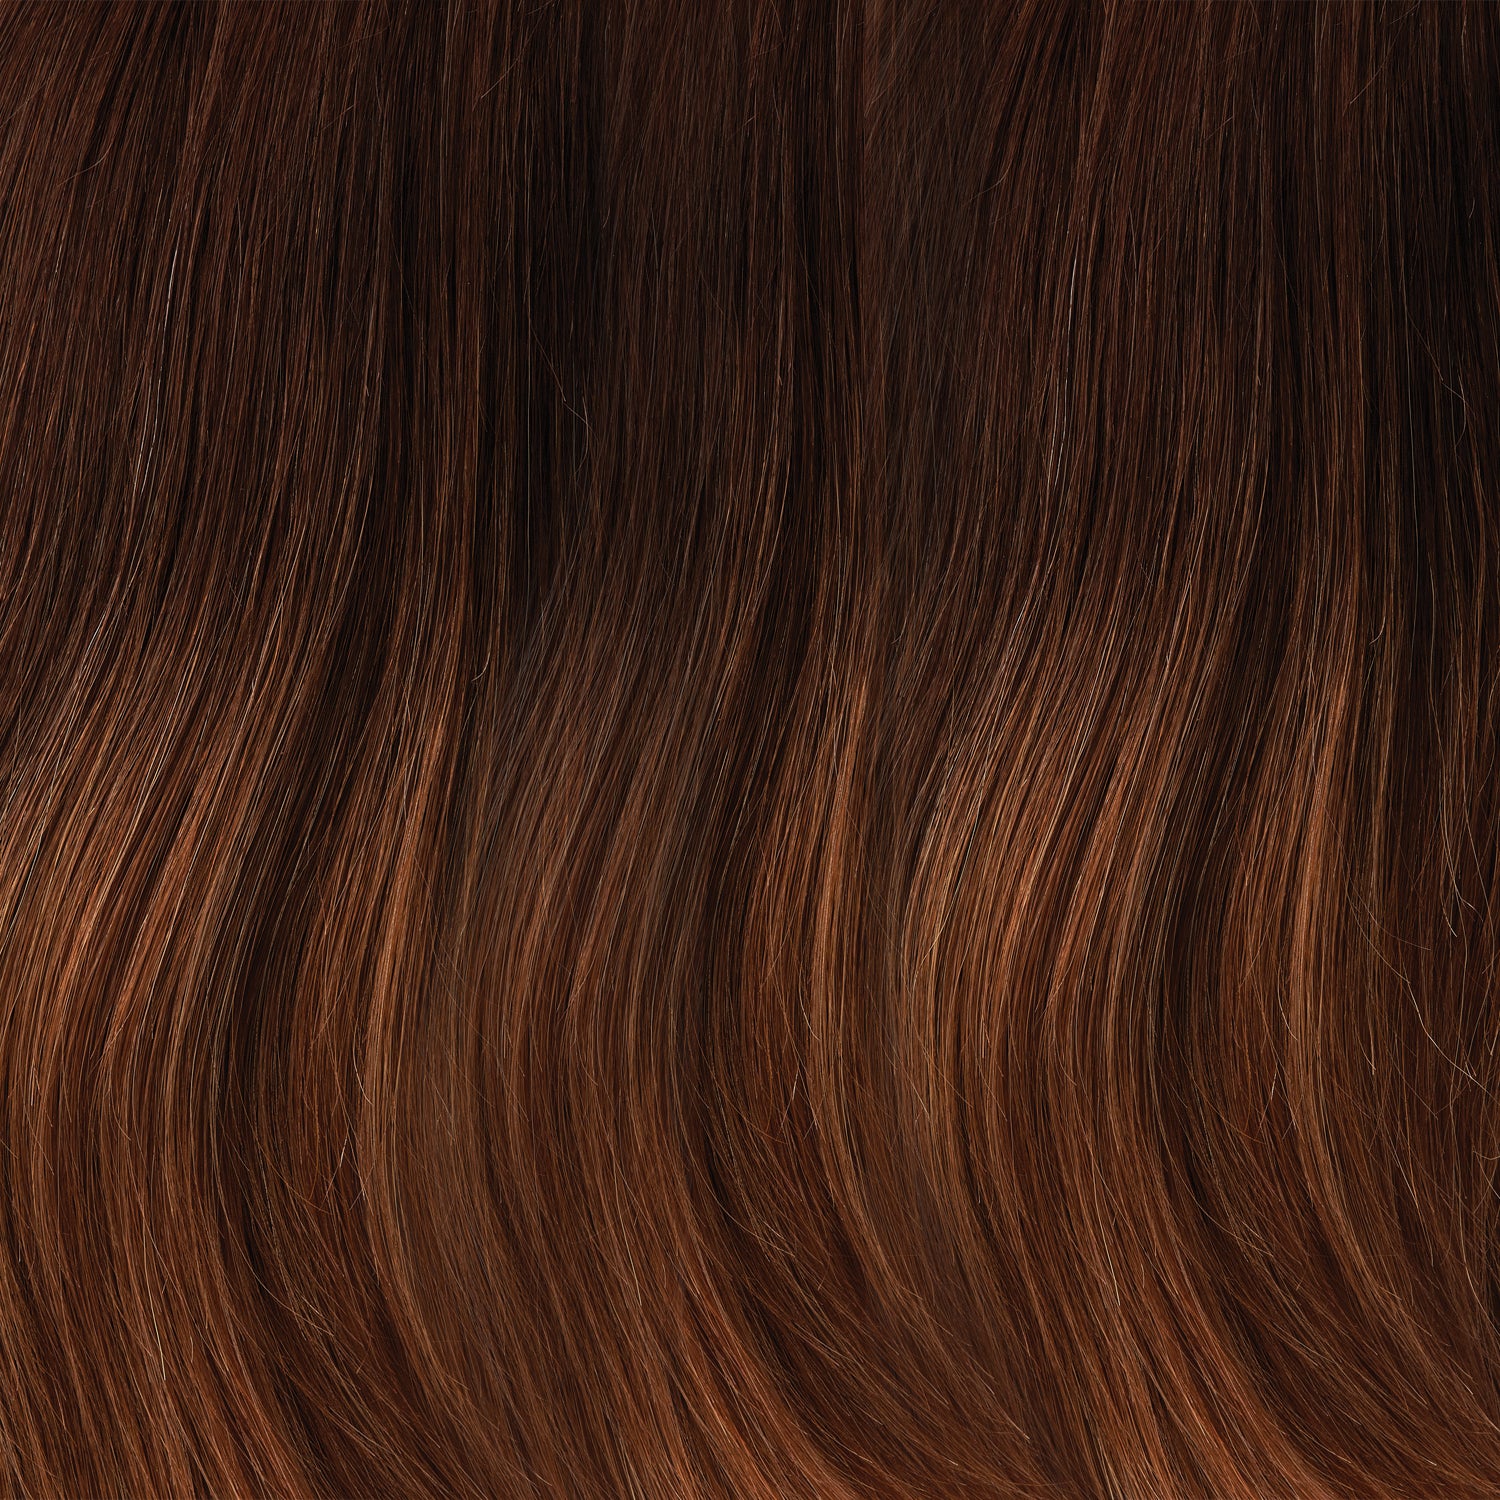 Gwyneth wig - Jon Renau SmartLace Human Hair Collection